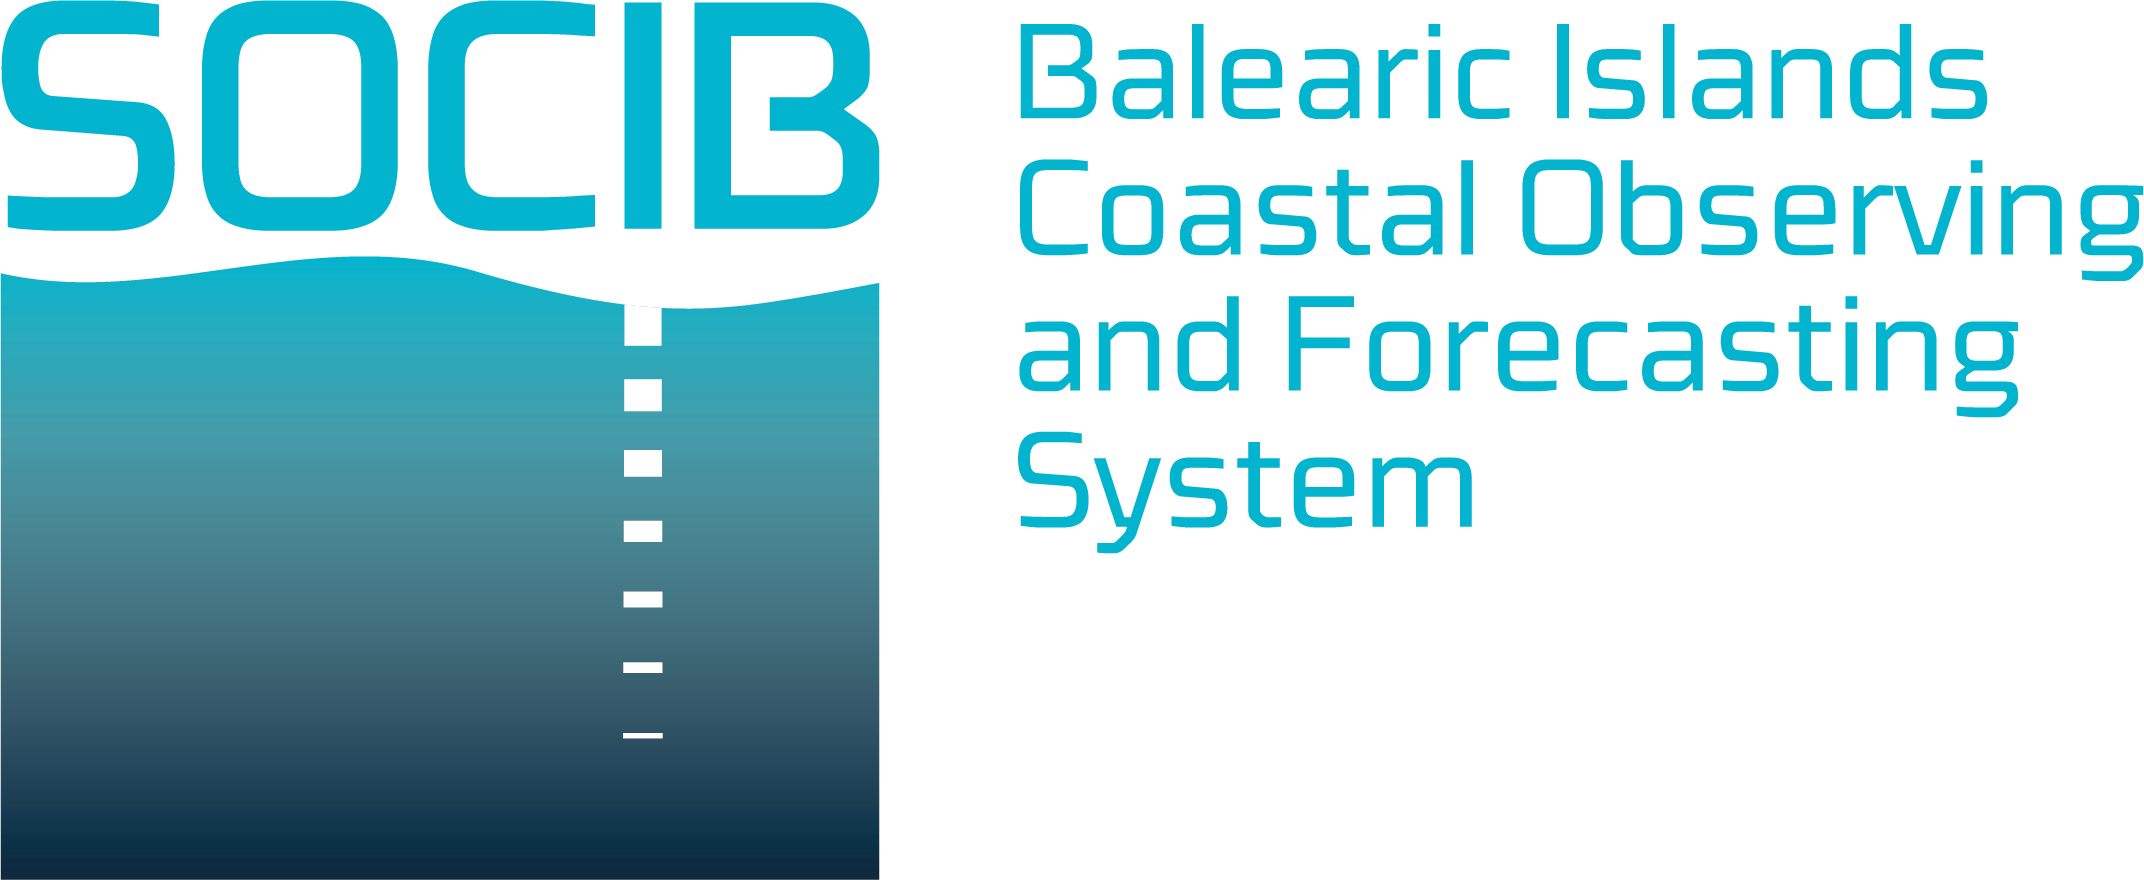 SOCIB - Balearic Islands Coastal Observing and Forecasting System